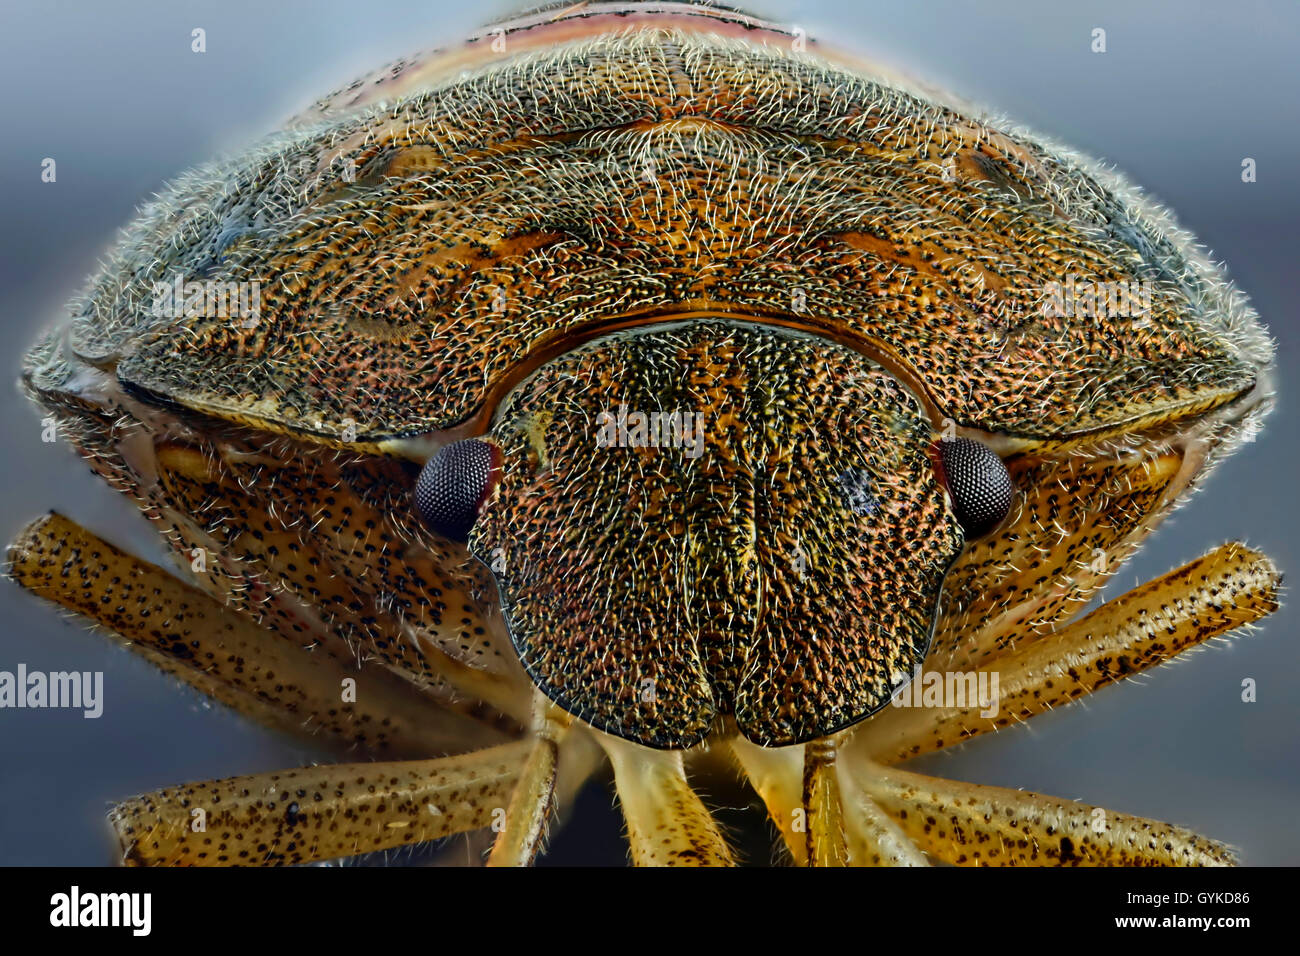 Wanzen (Heteroptera, Hemiptera), Makroaufnahme des Kopfes einer braunen Wanze | heteropterans, vero bugs (Heteroptera, Hemiptera Foto Stock